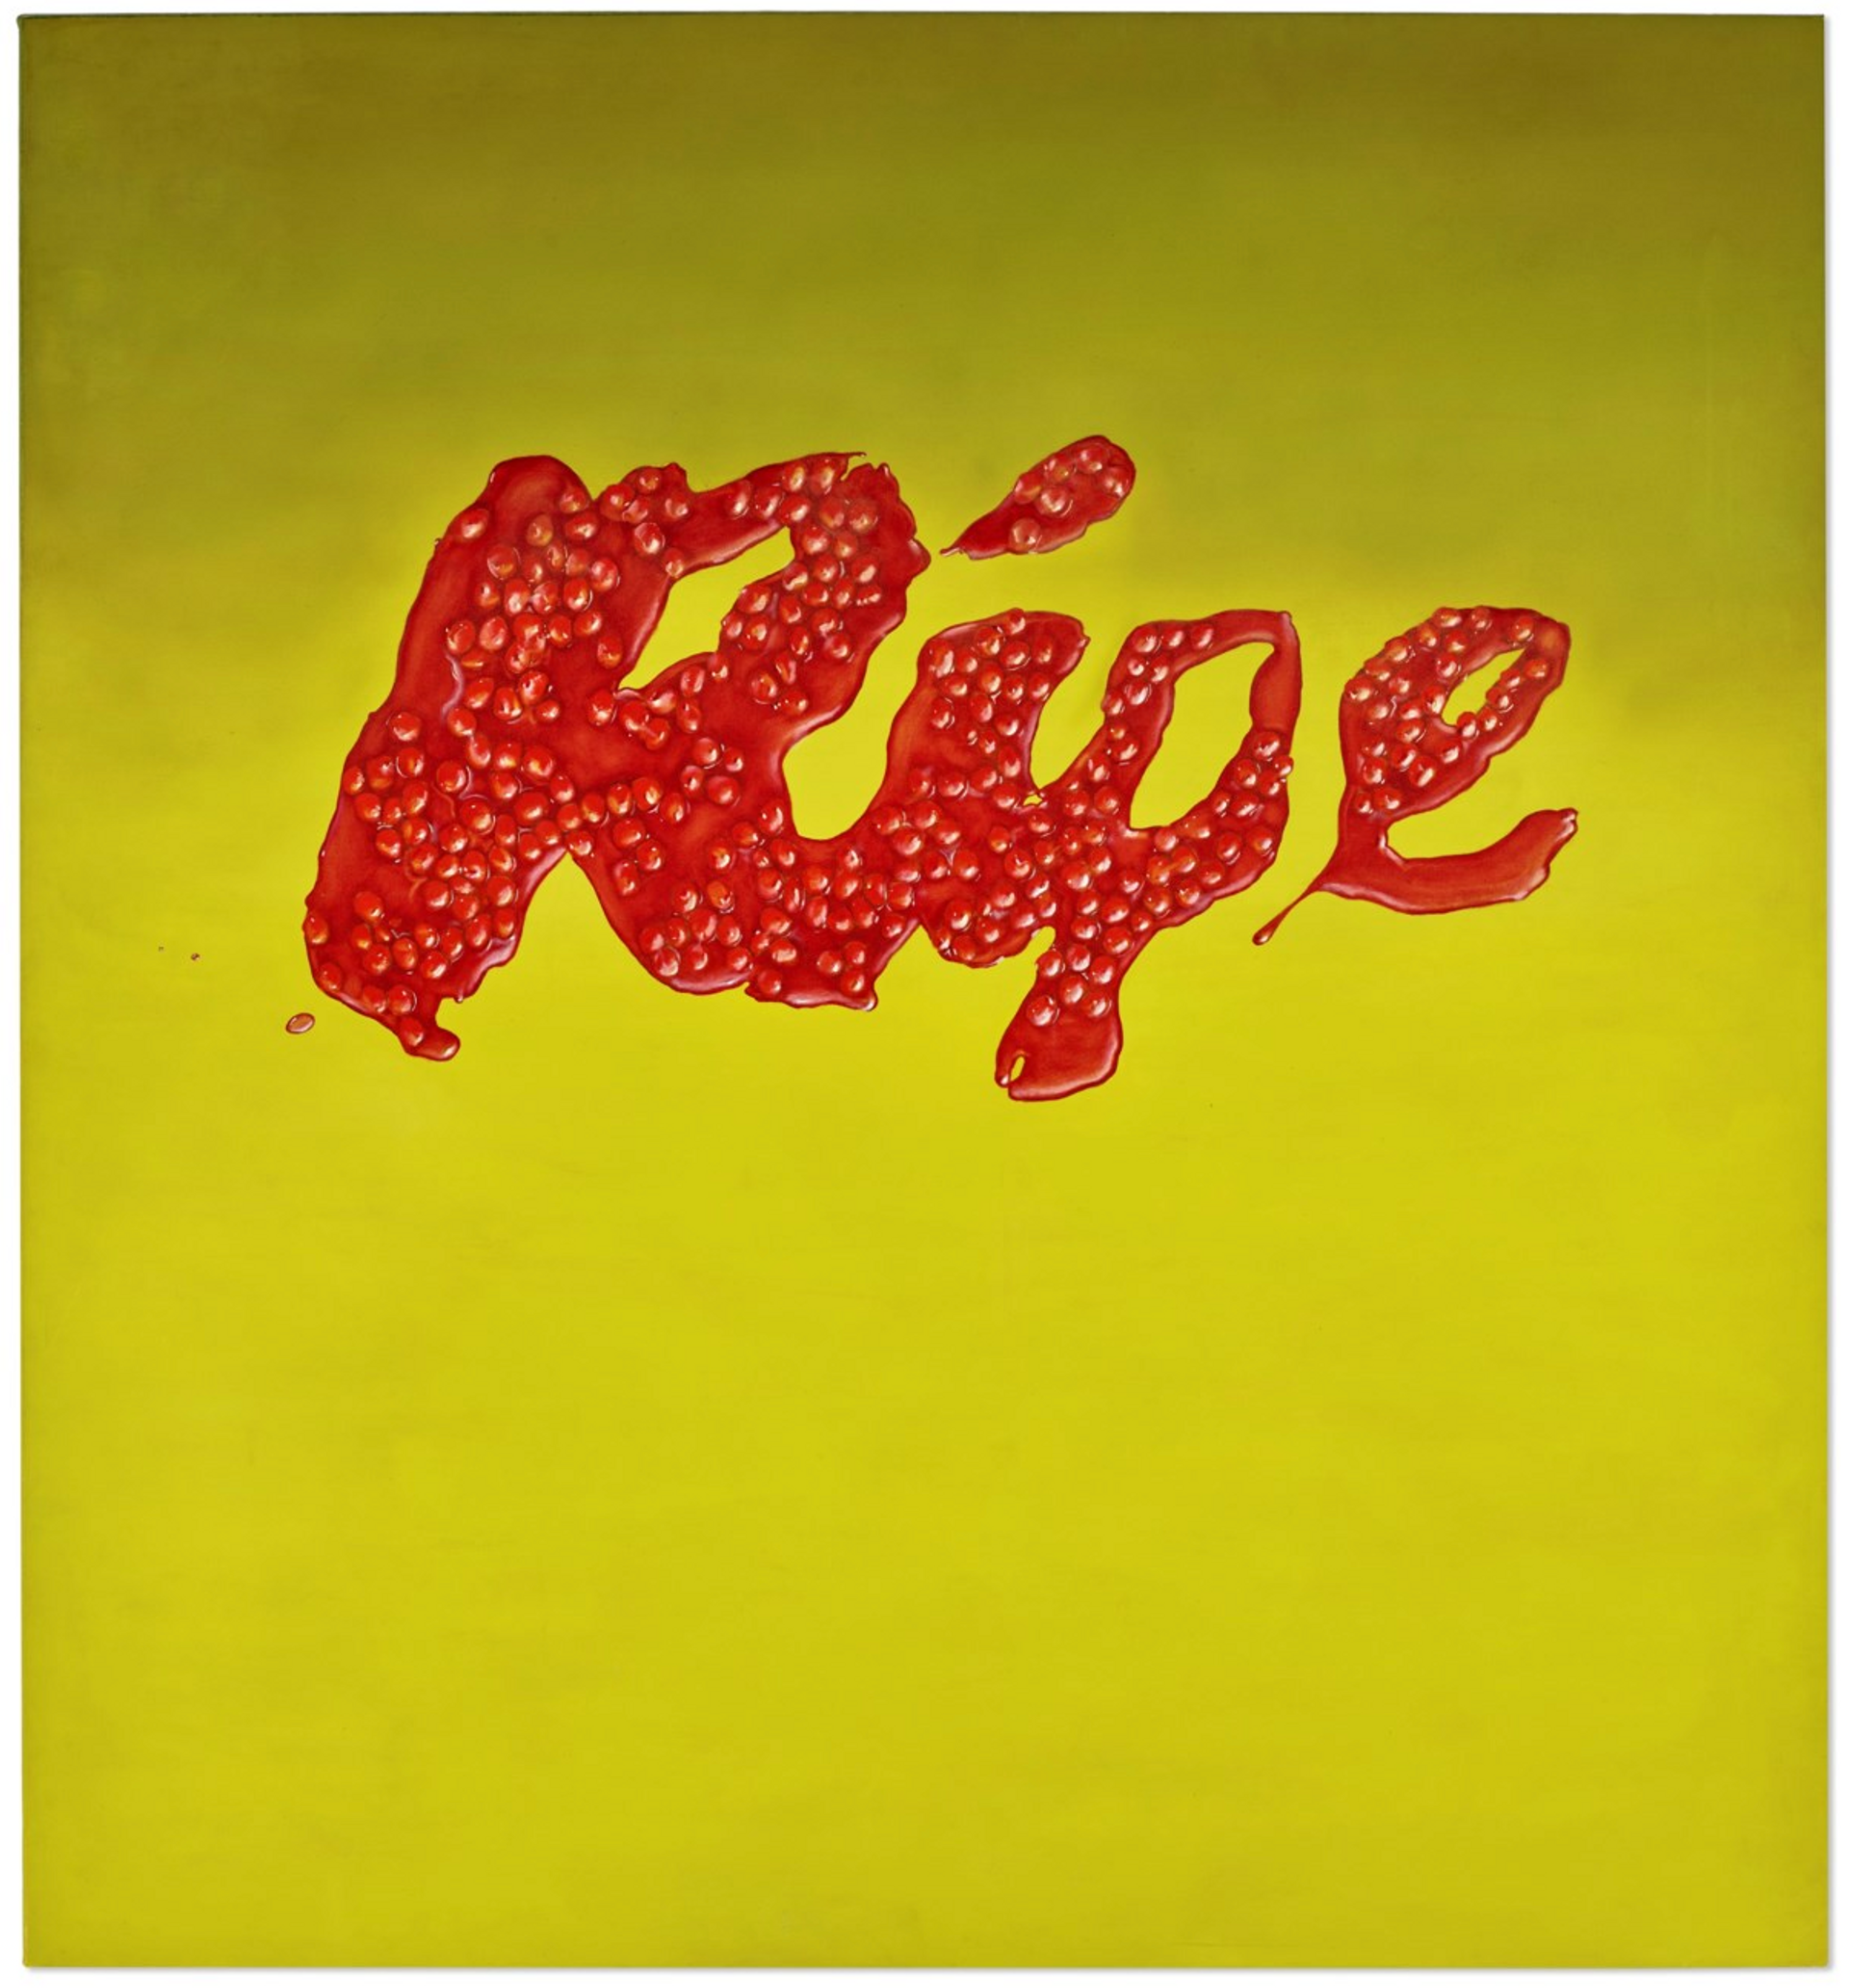 Ripe by Ed Ruscha